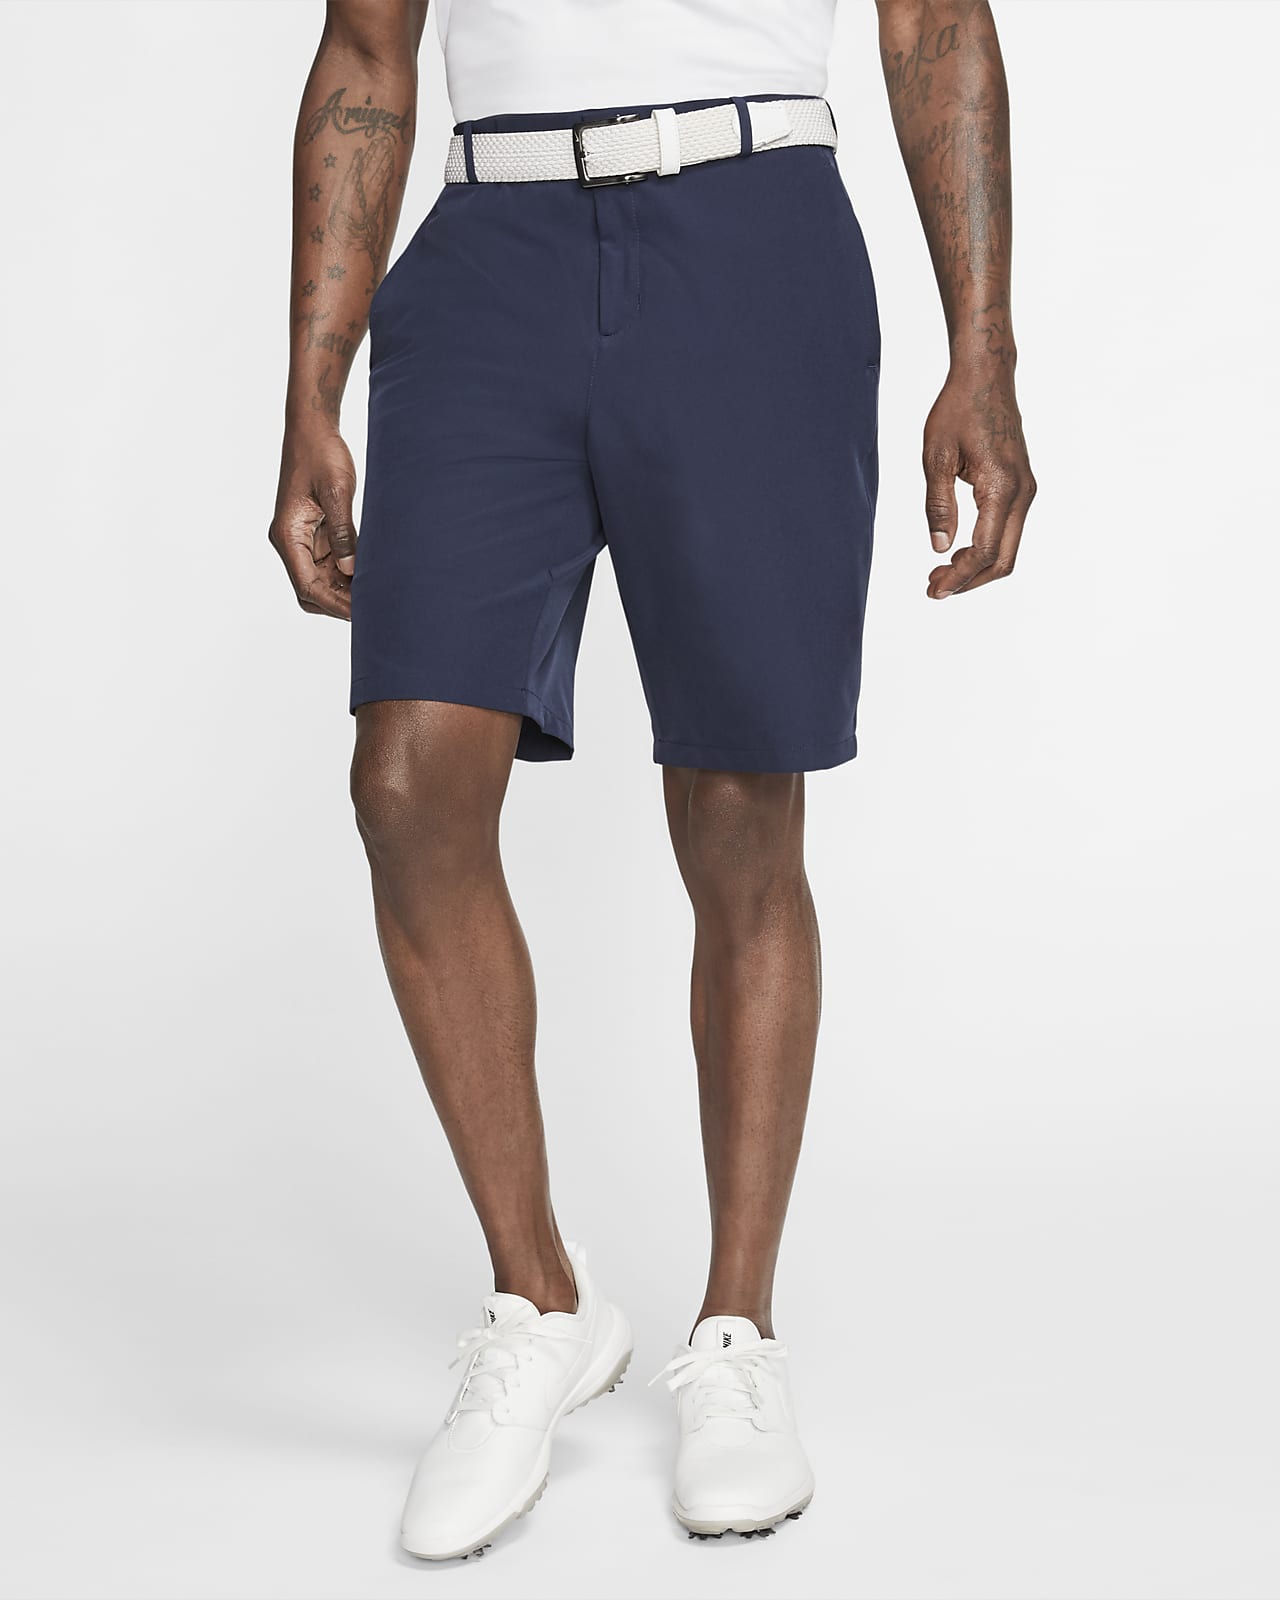 nike standard fit golf shorts